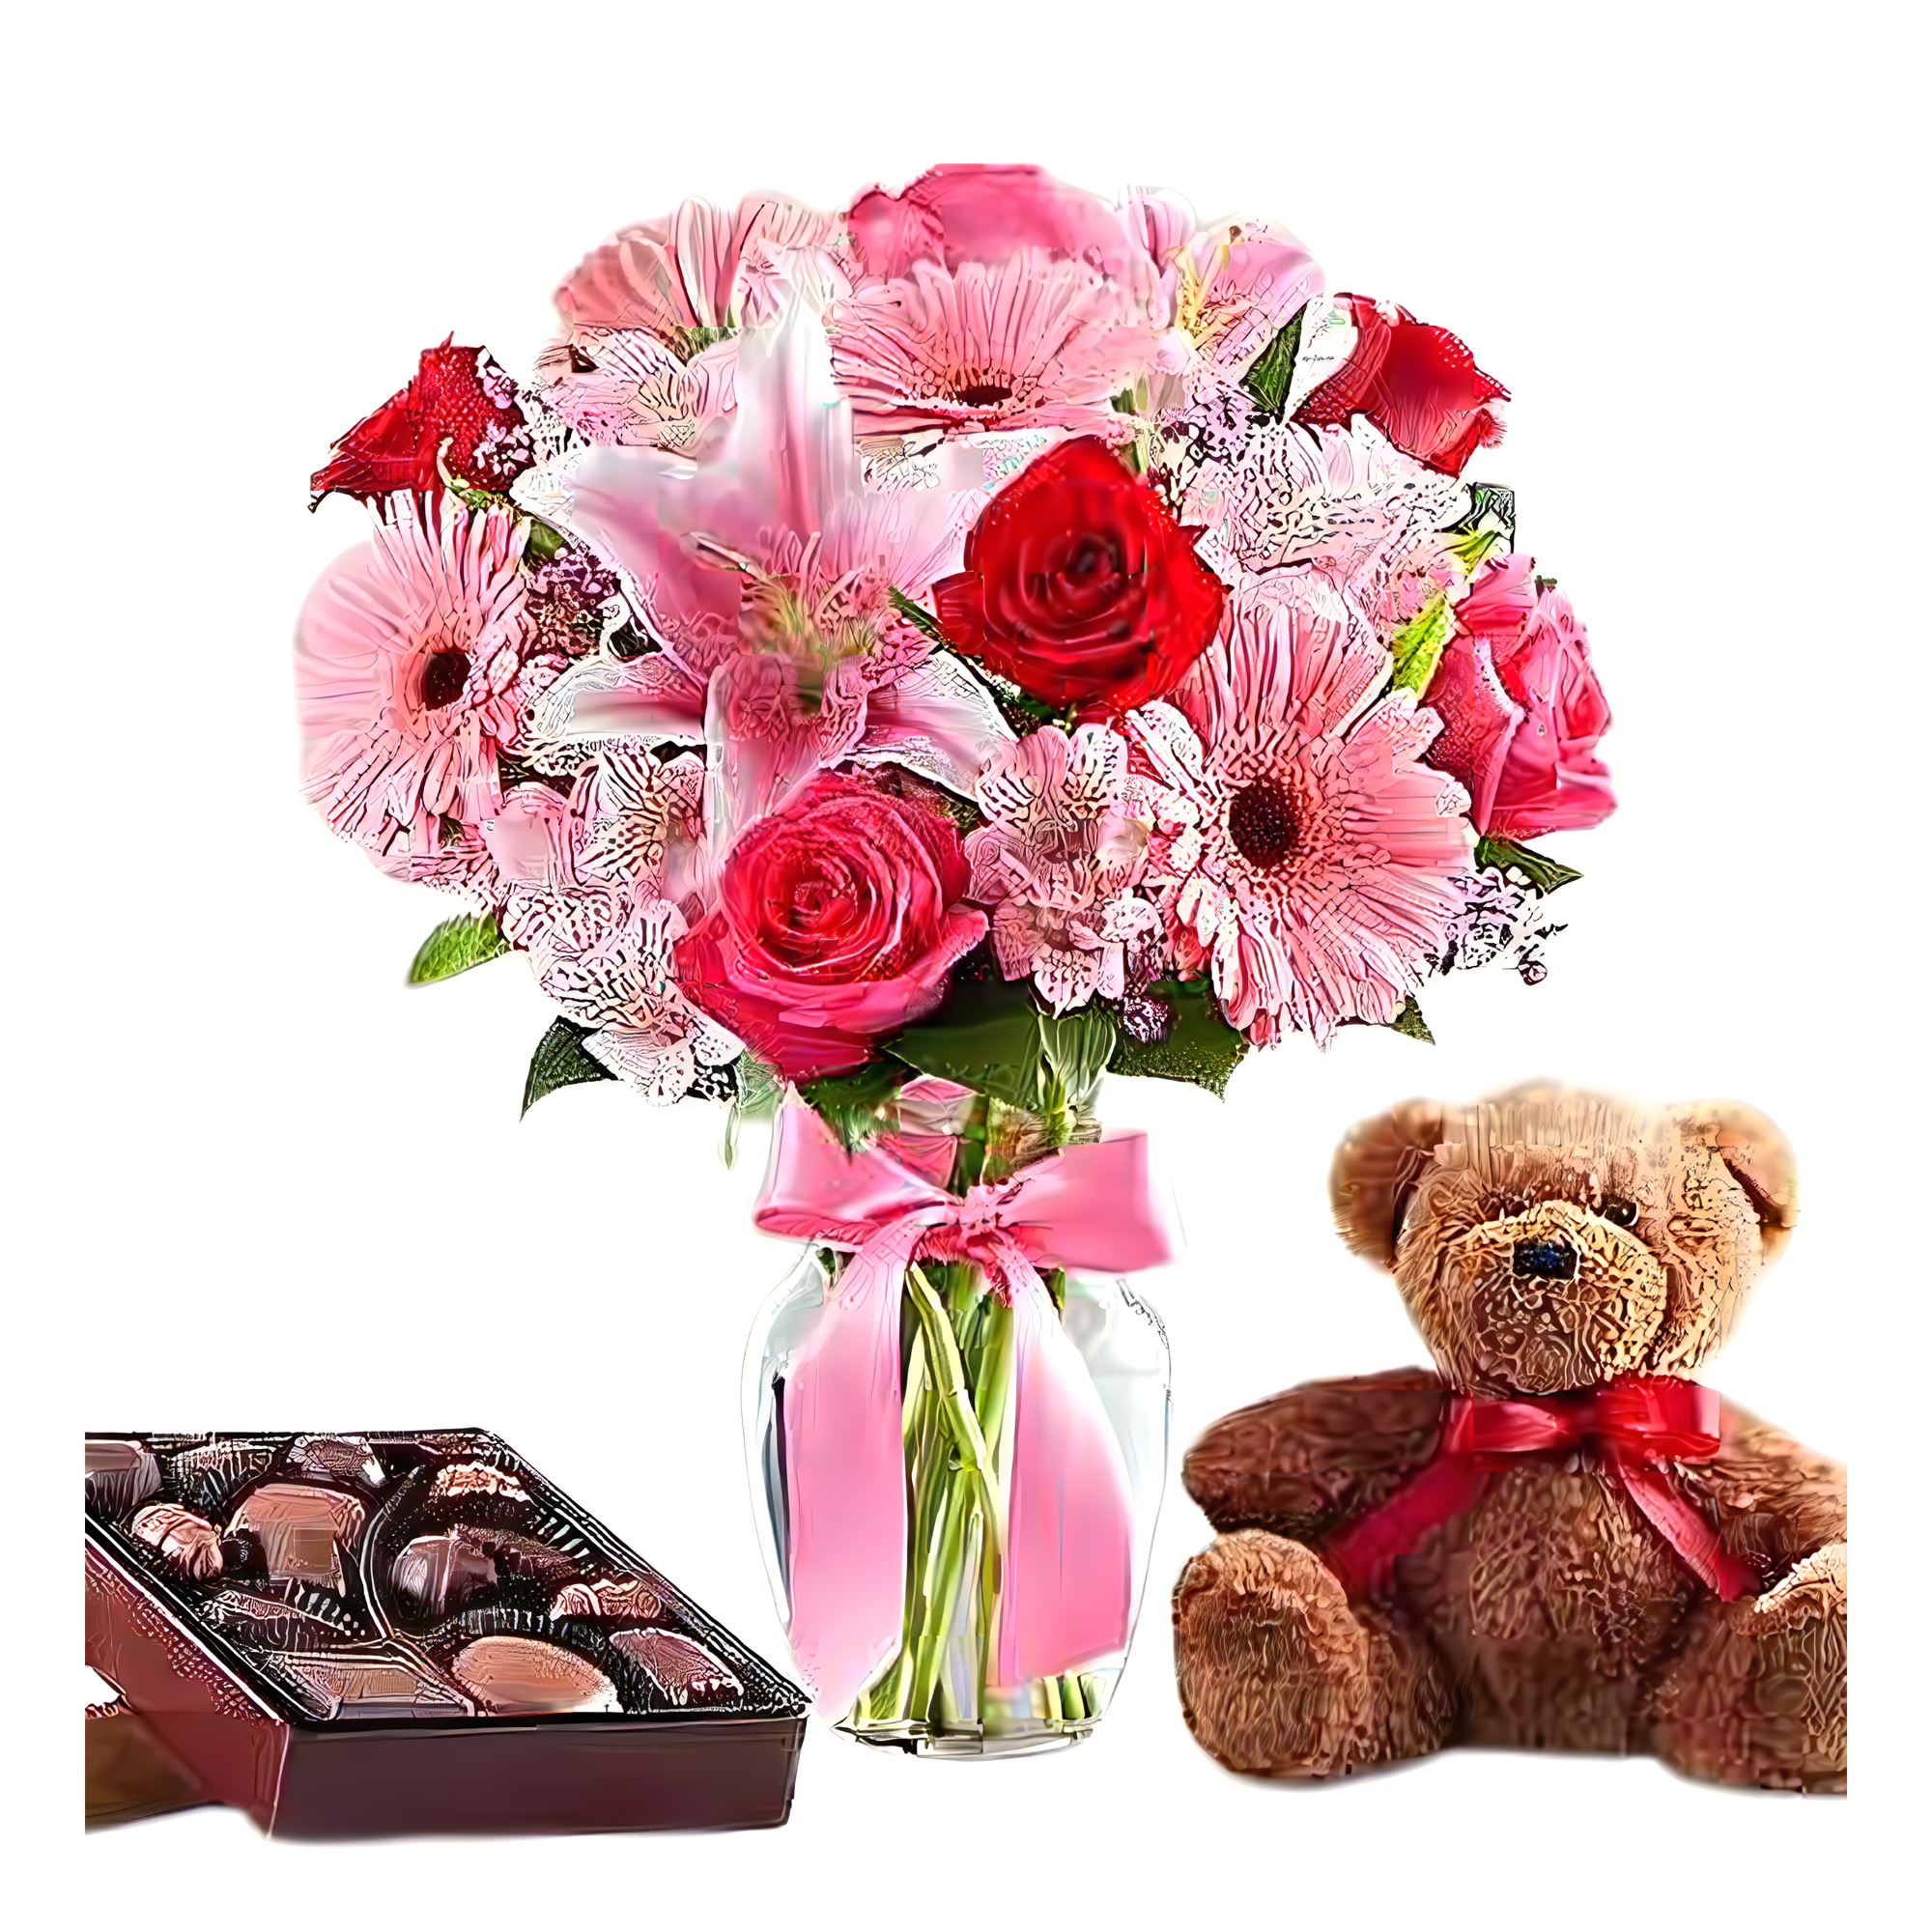 Manhattan Flower Delivery - My Valentine's Love With Teddy Bear & Chocolates - Valentine's Day